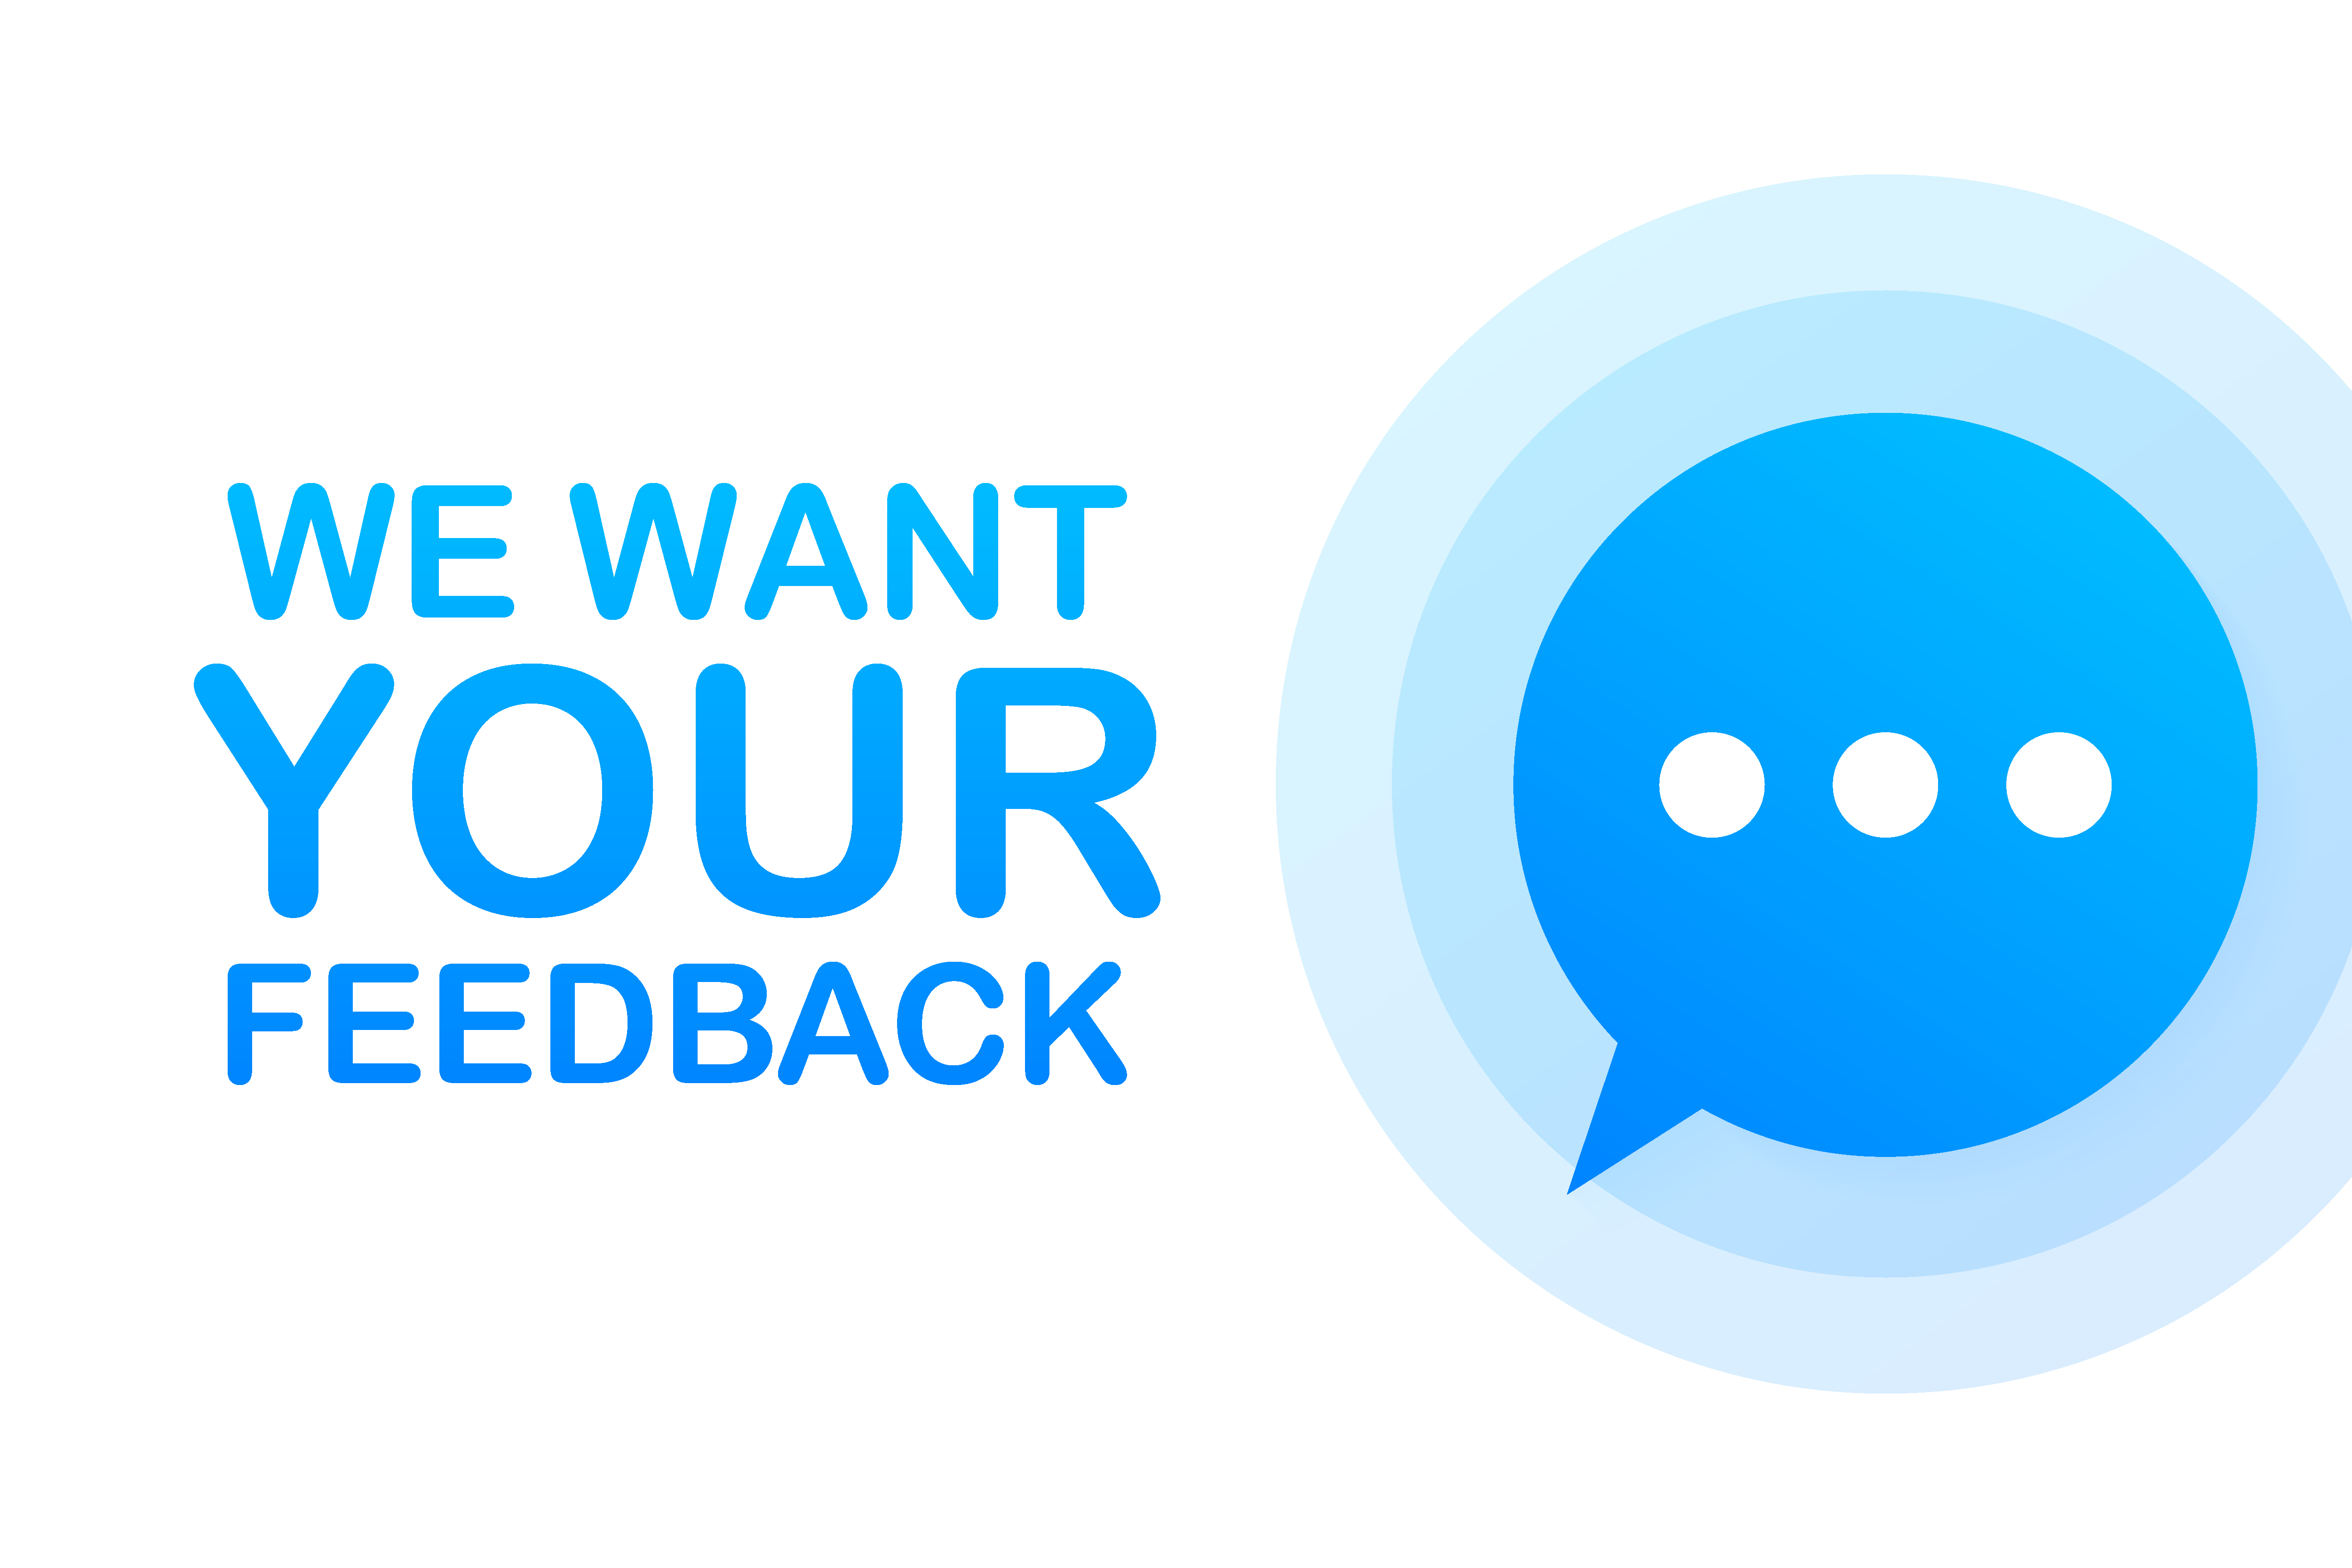 We want feedback stock photo image